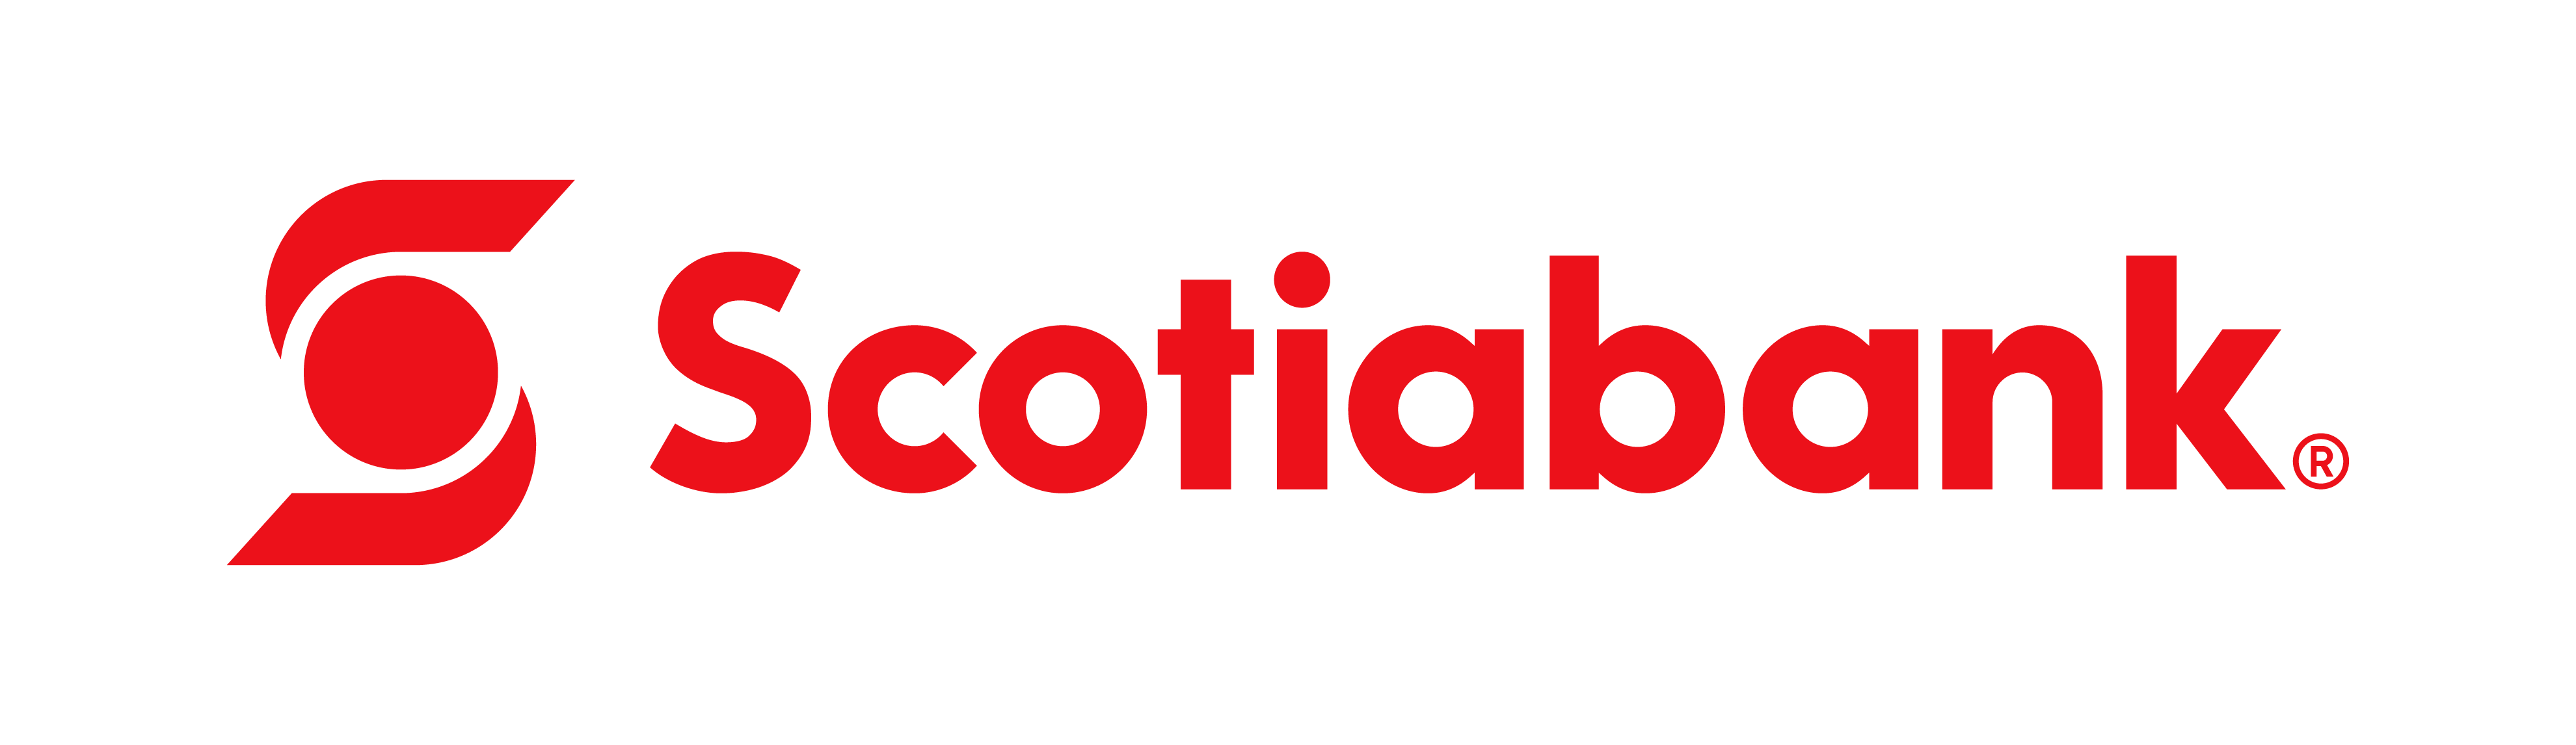 Scotiabank_Corporate_Logo_RGB